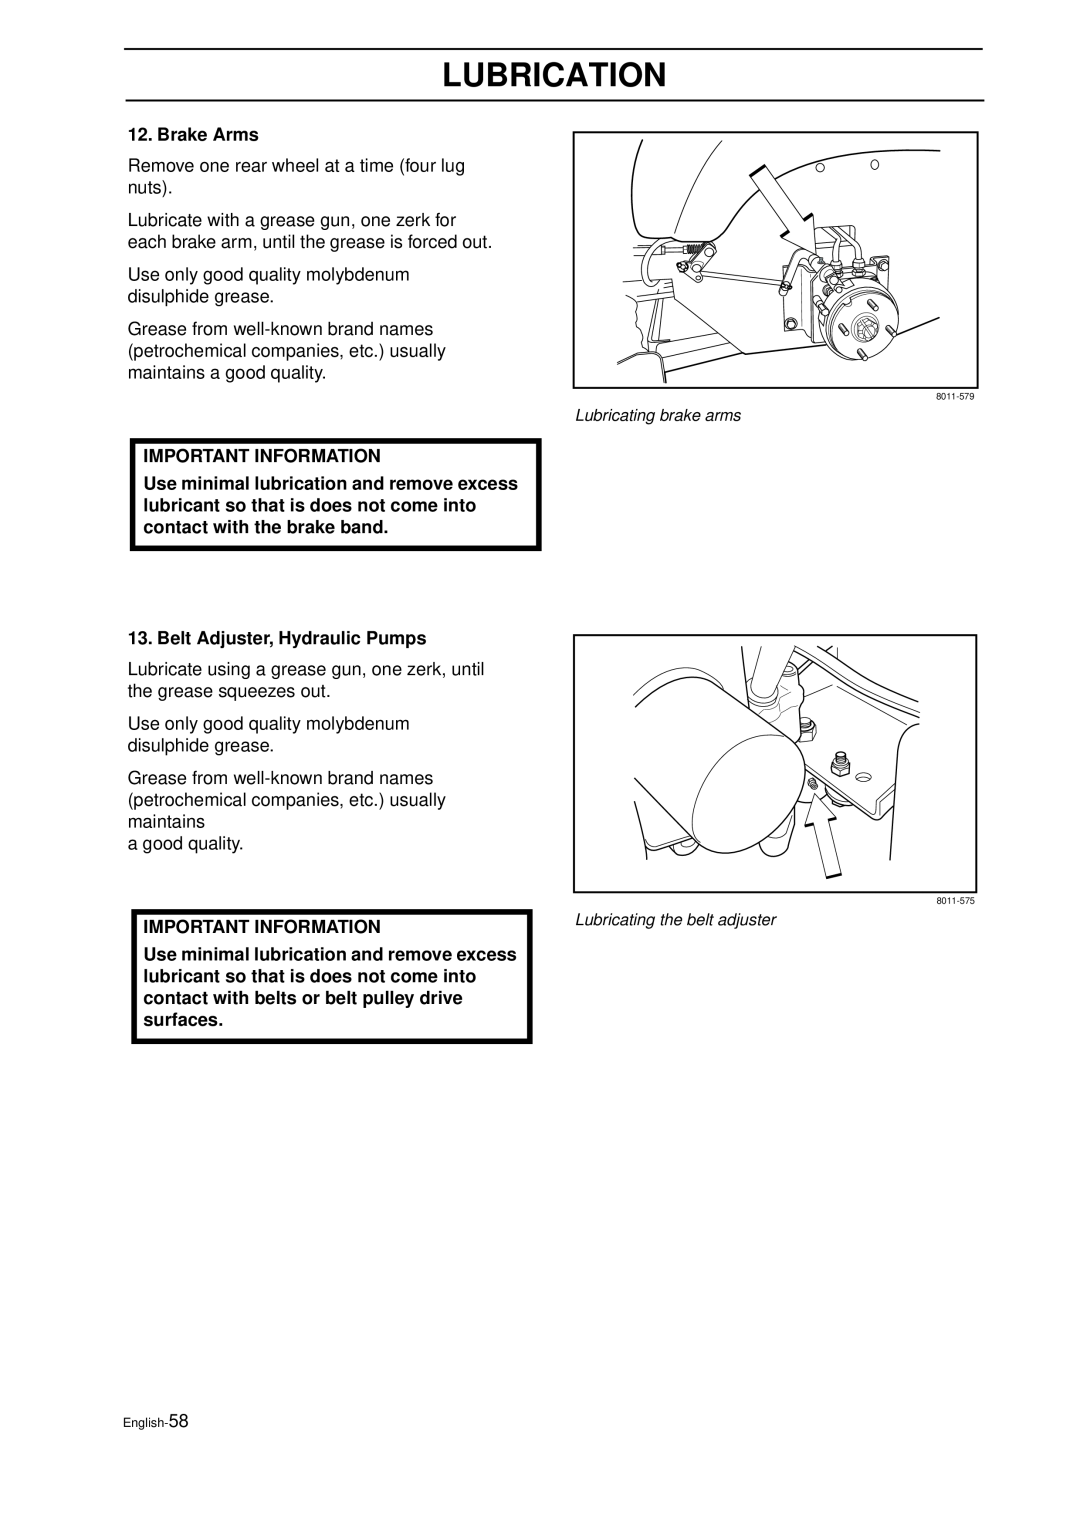 Husqvarna IZ 21 manual Brake Arms, Belt Adjuster, Hydraulic Pumps, Lubrication, Important Information 